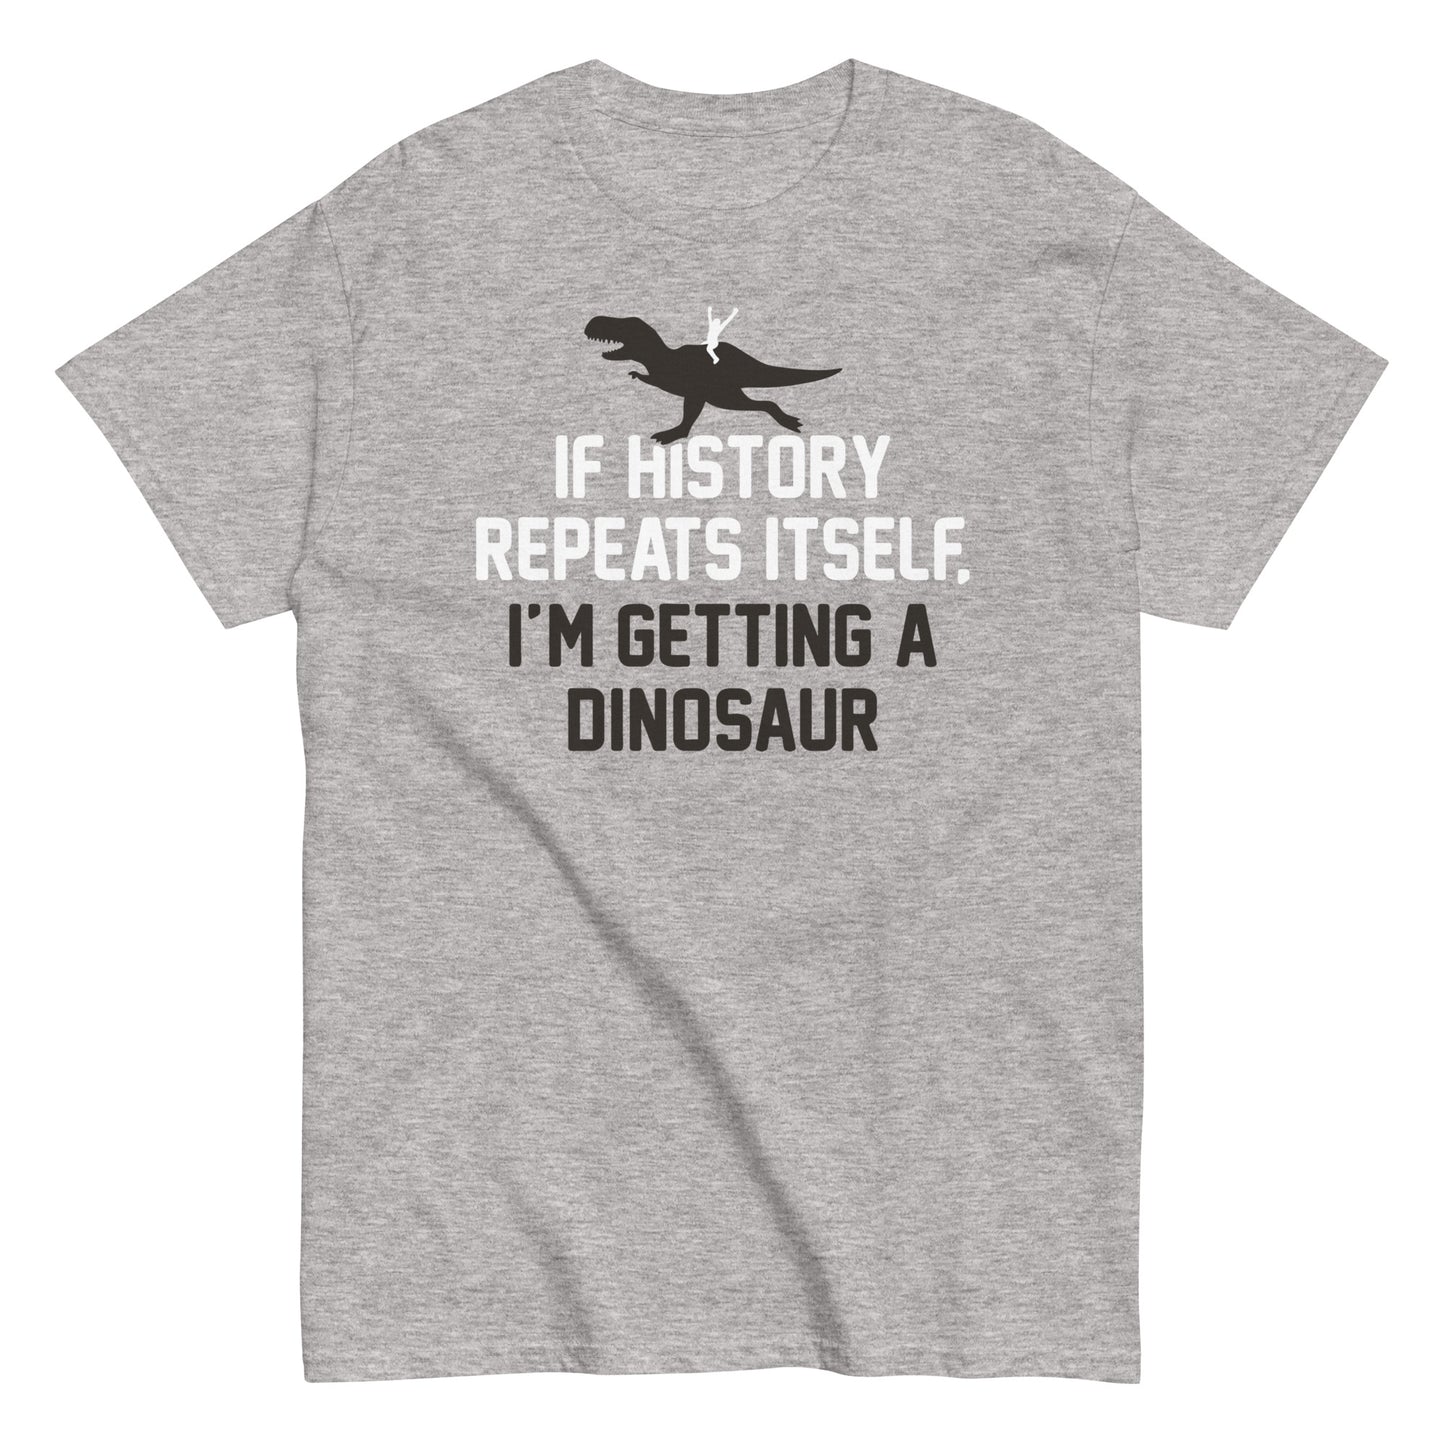 If History Repeats Itself, I'm Getting A Dinosaur Men's Classic Tee